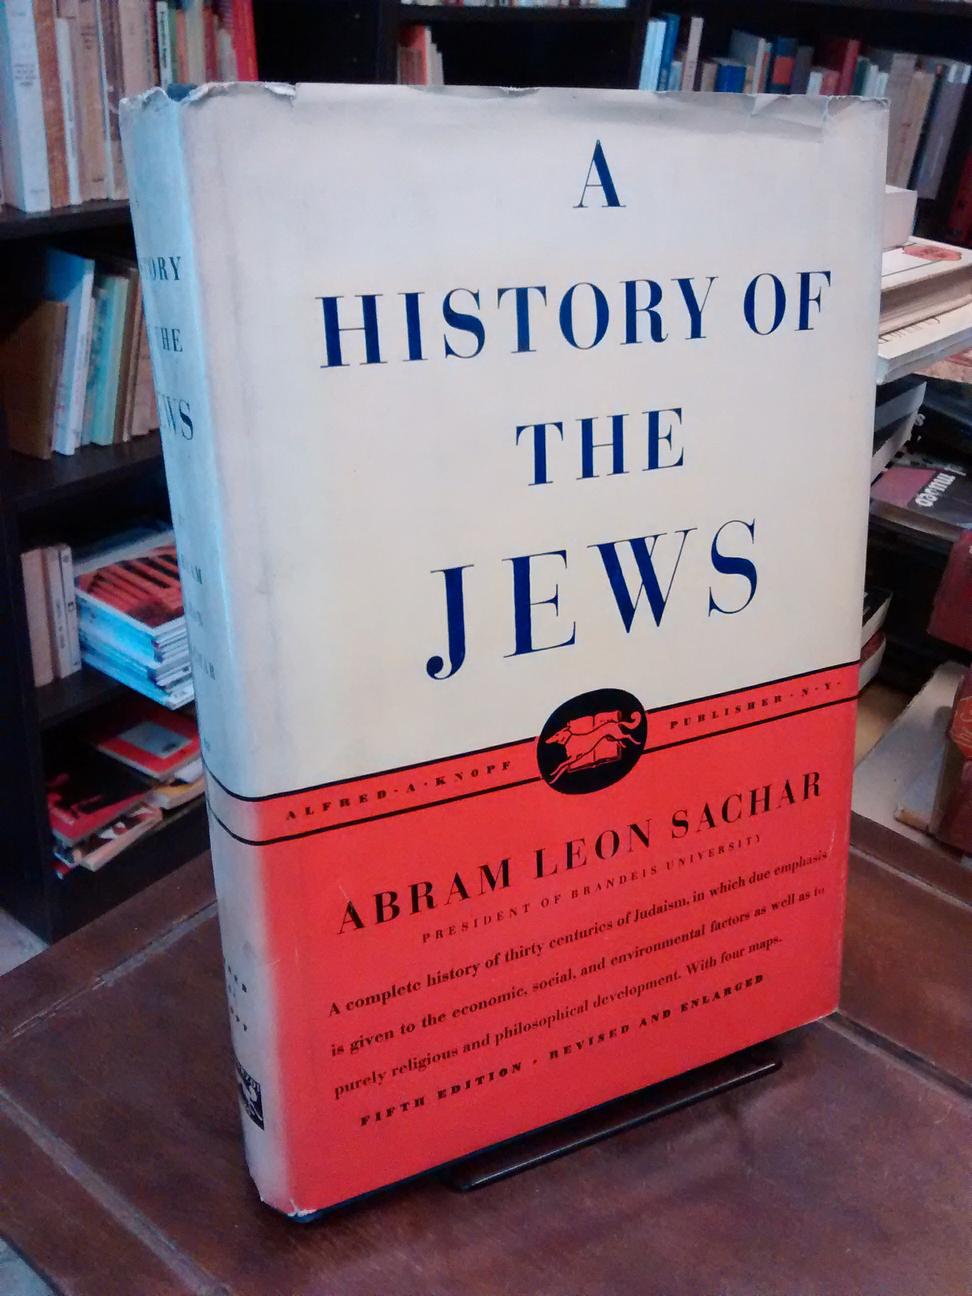 A History of the Jews - Abram Leon Sachar